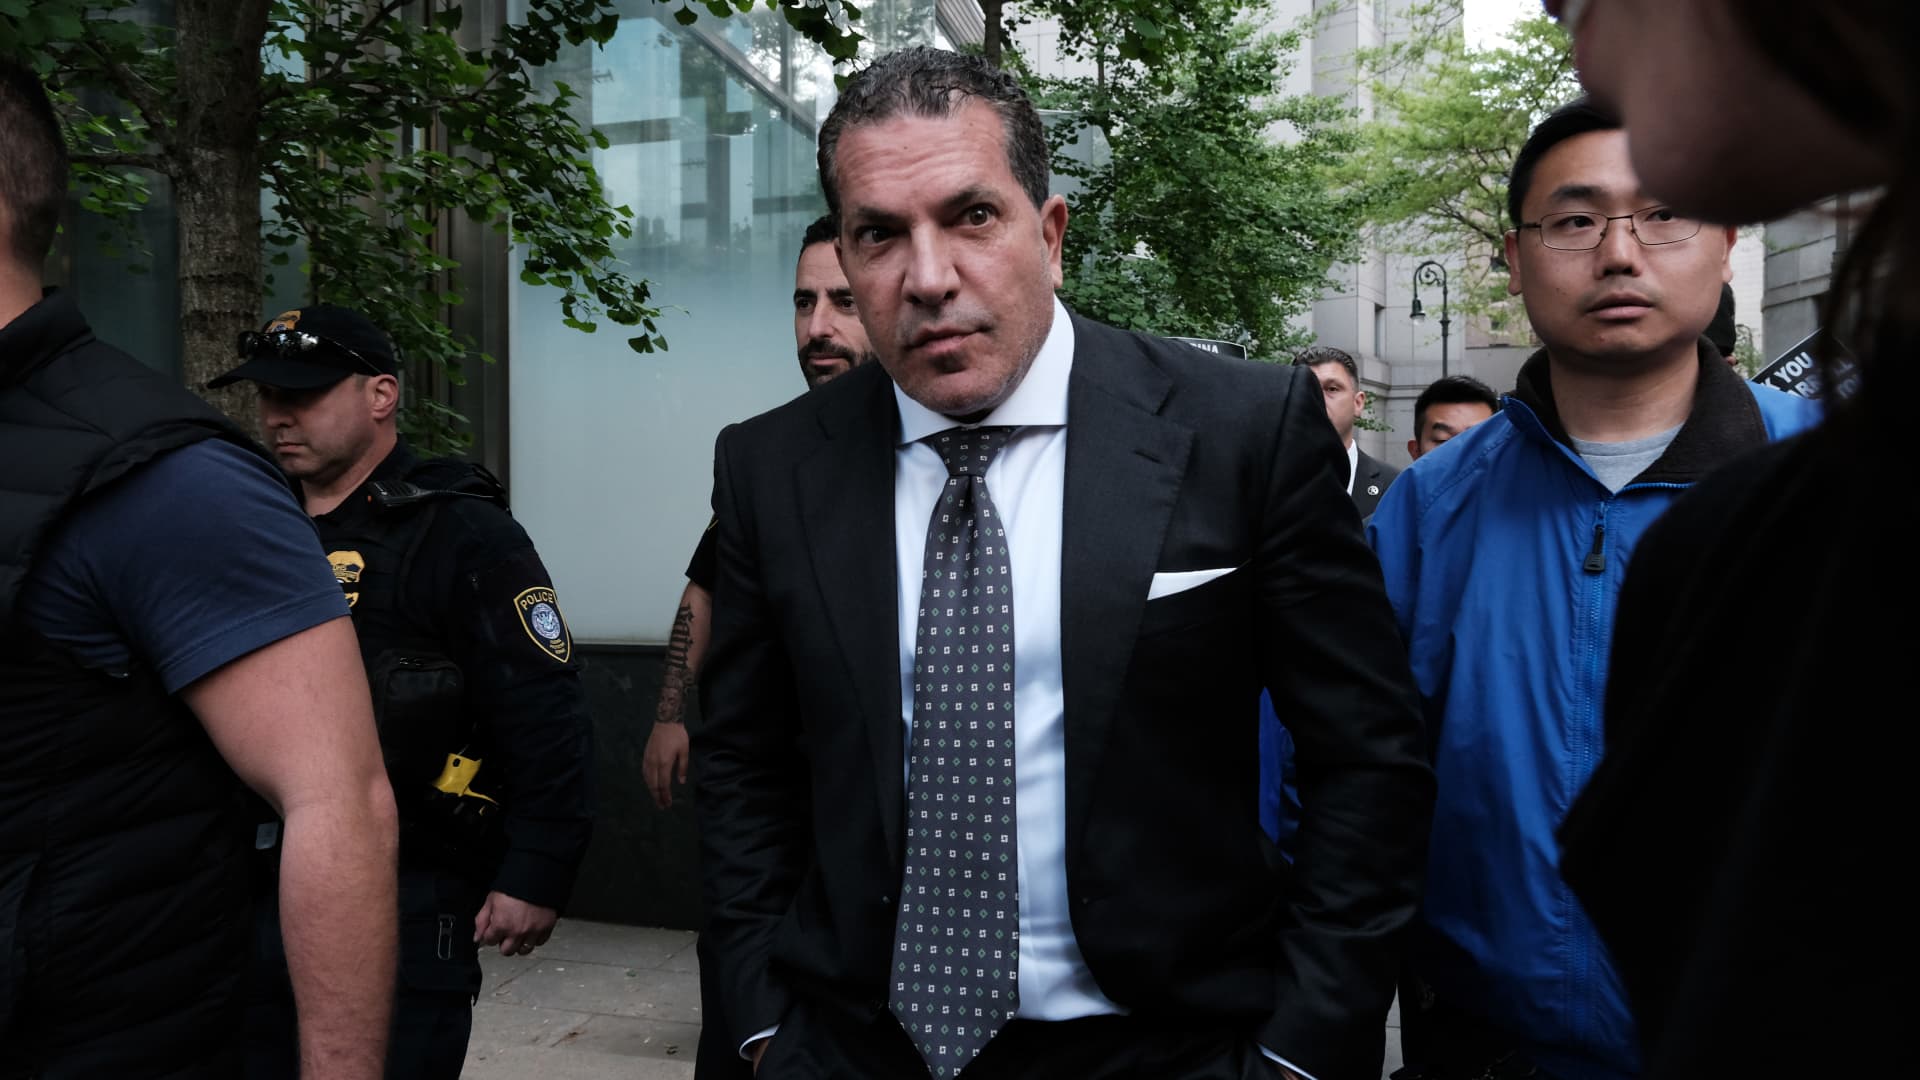 Trump loses legal professional Joe Tacopina as porn superstar hush money trial looms